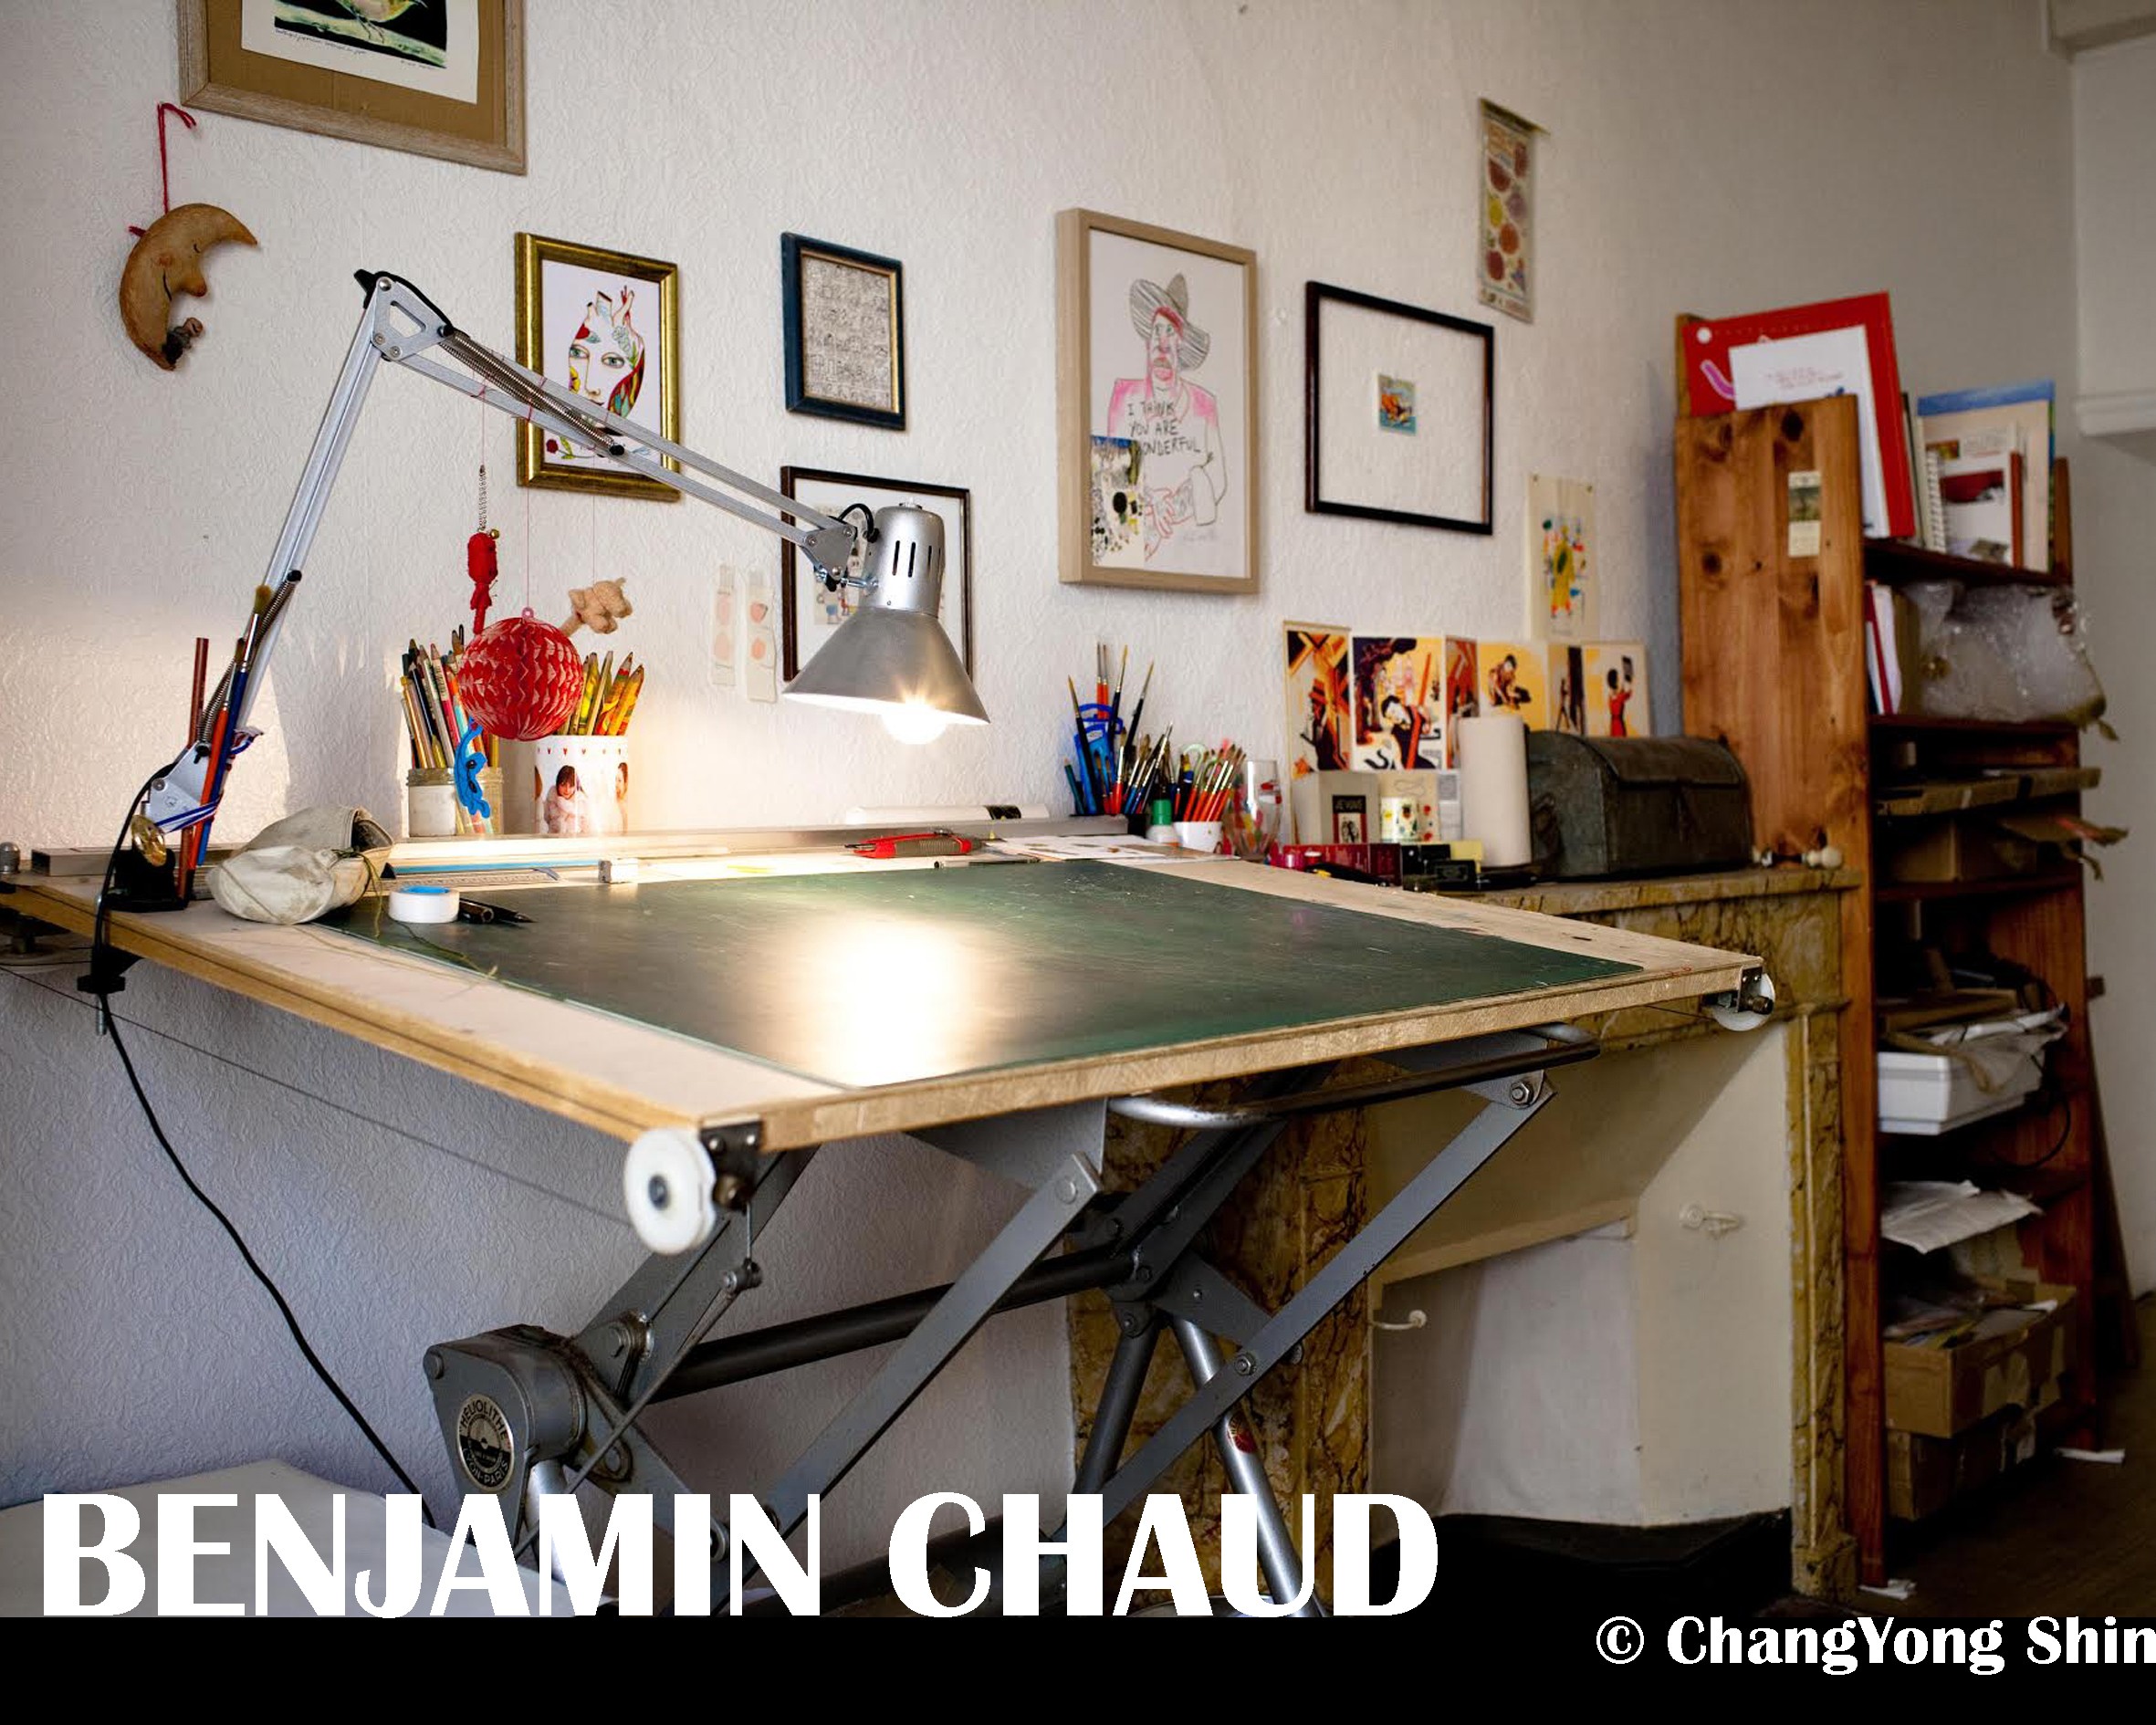 Benjamin Chaud